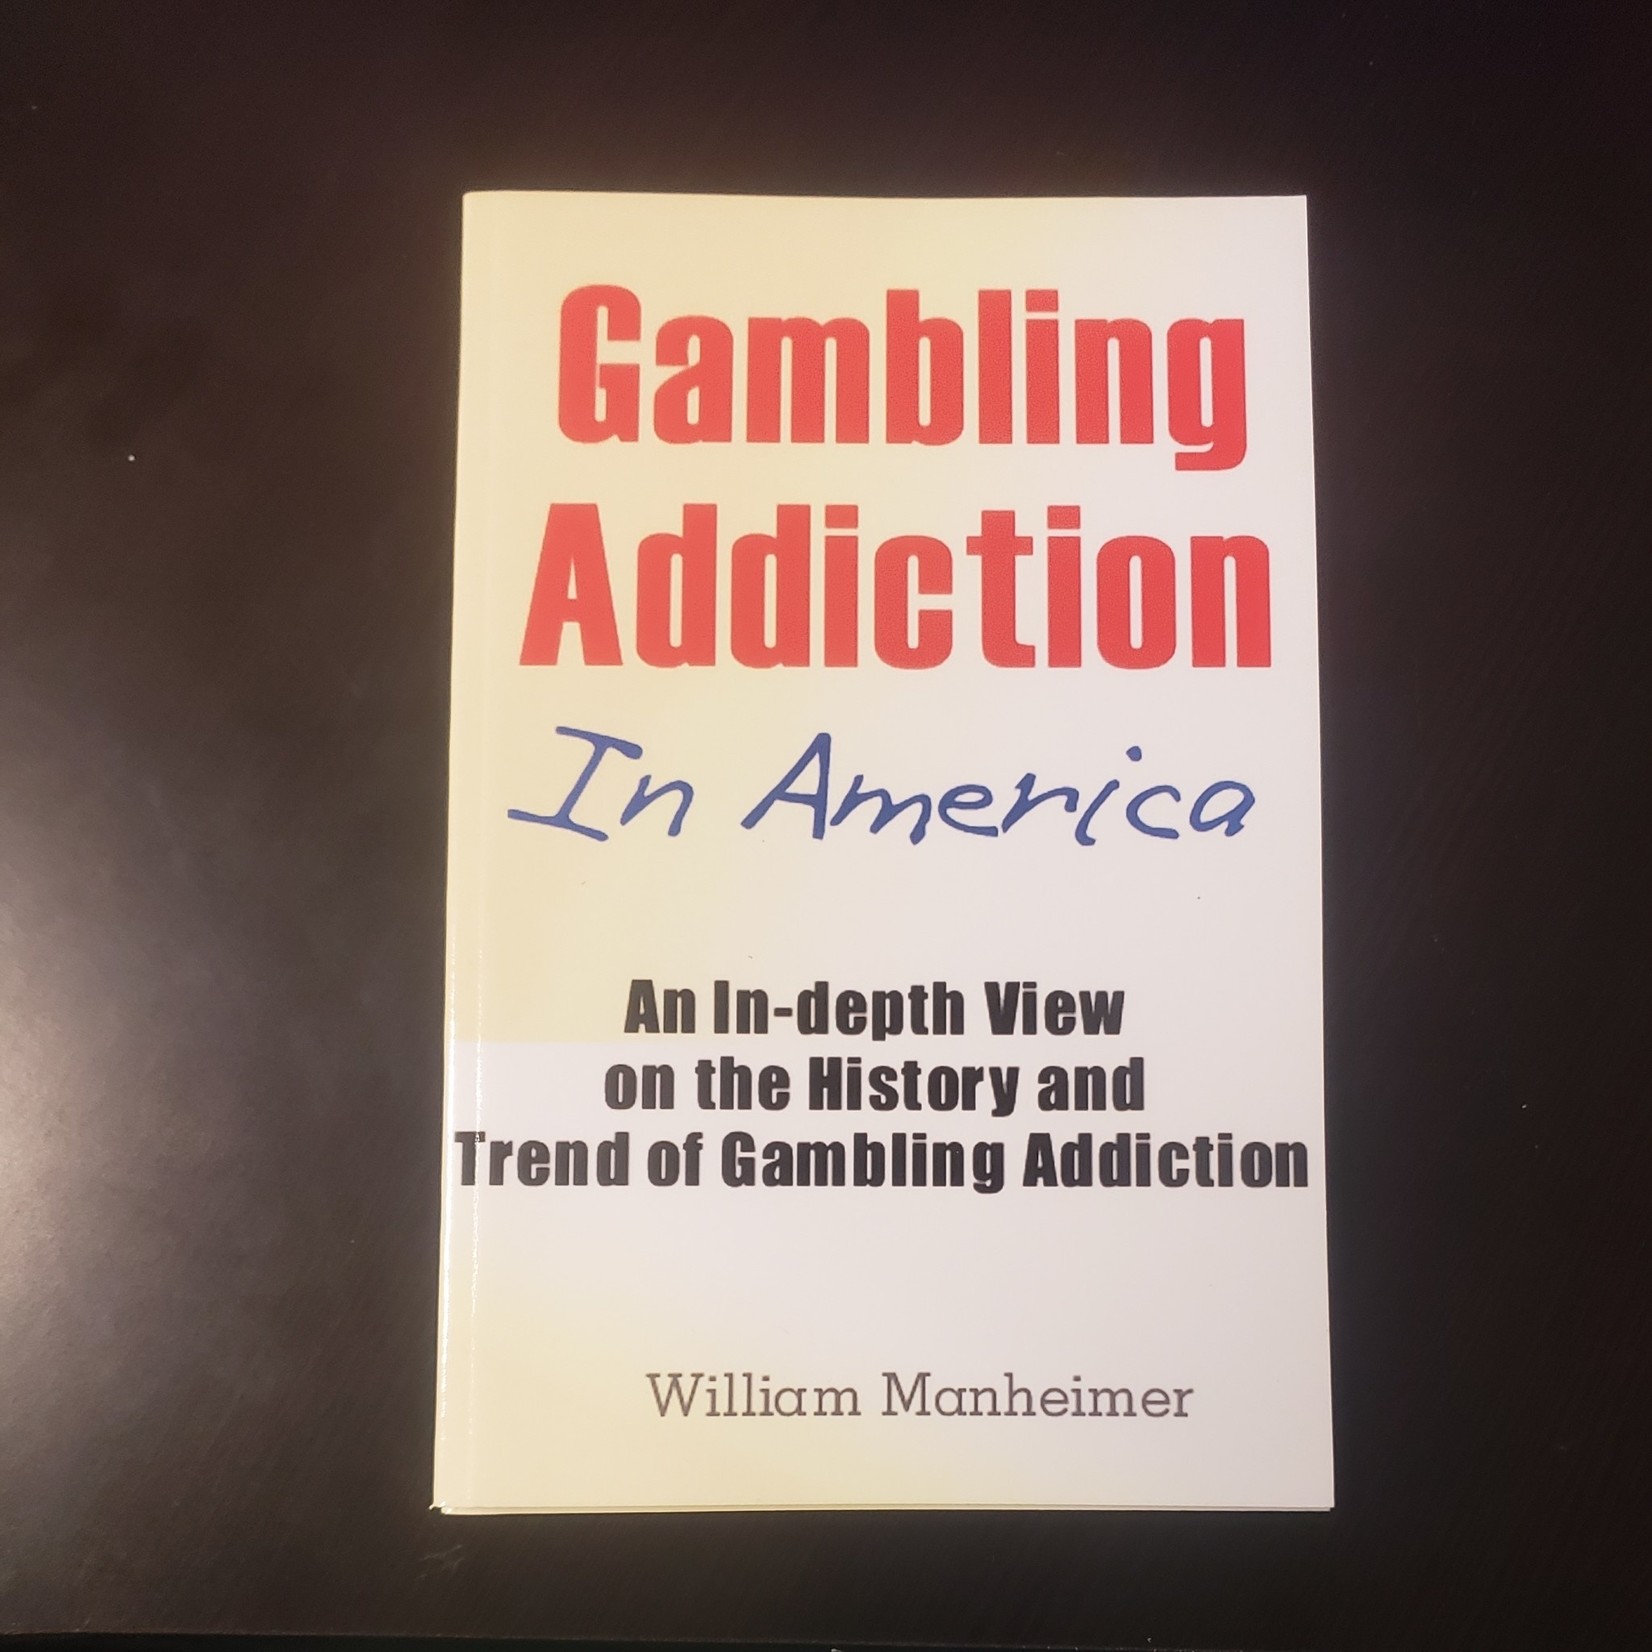 Gambling Addiction in America